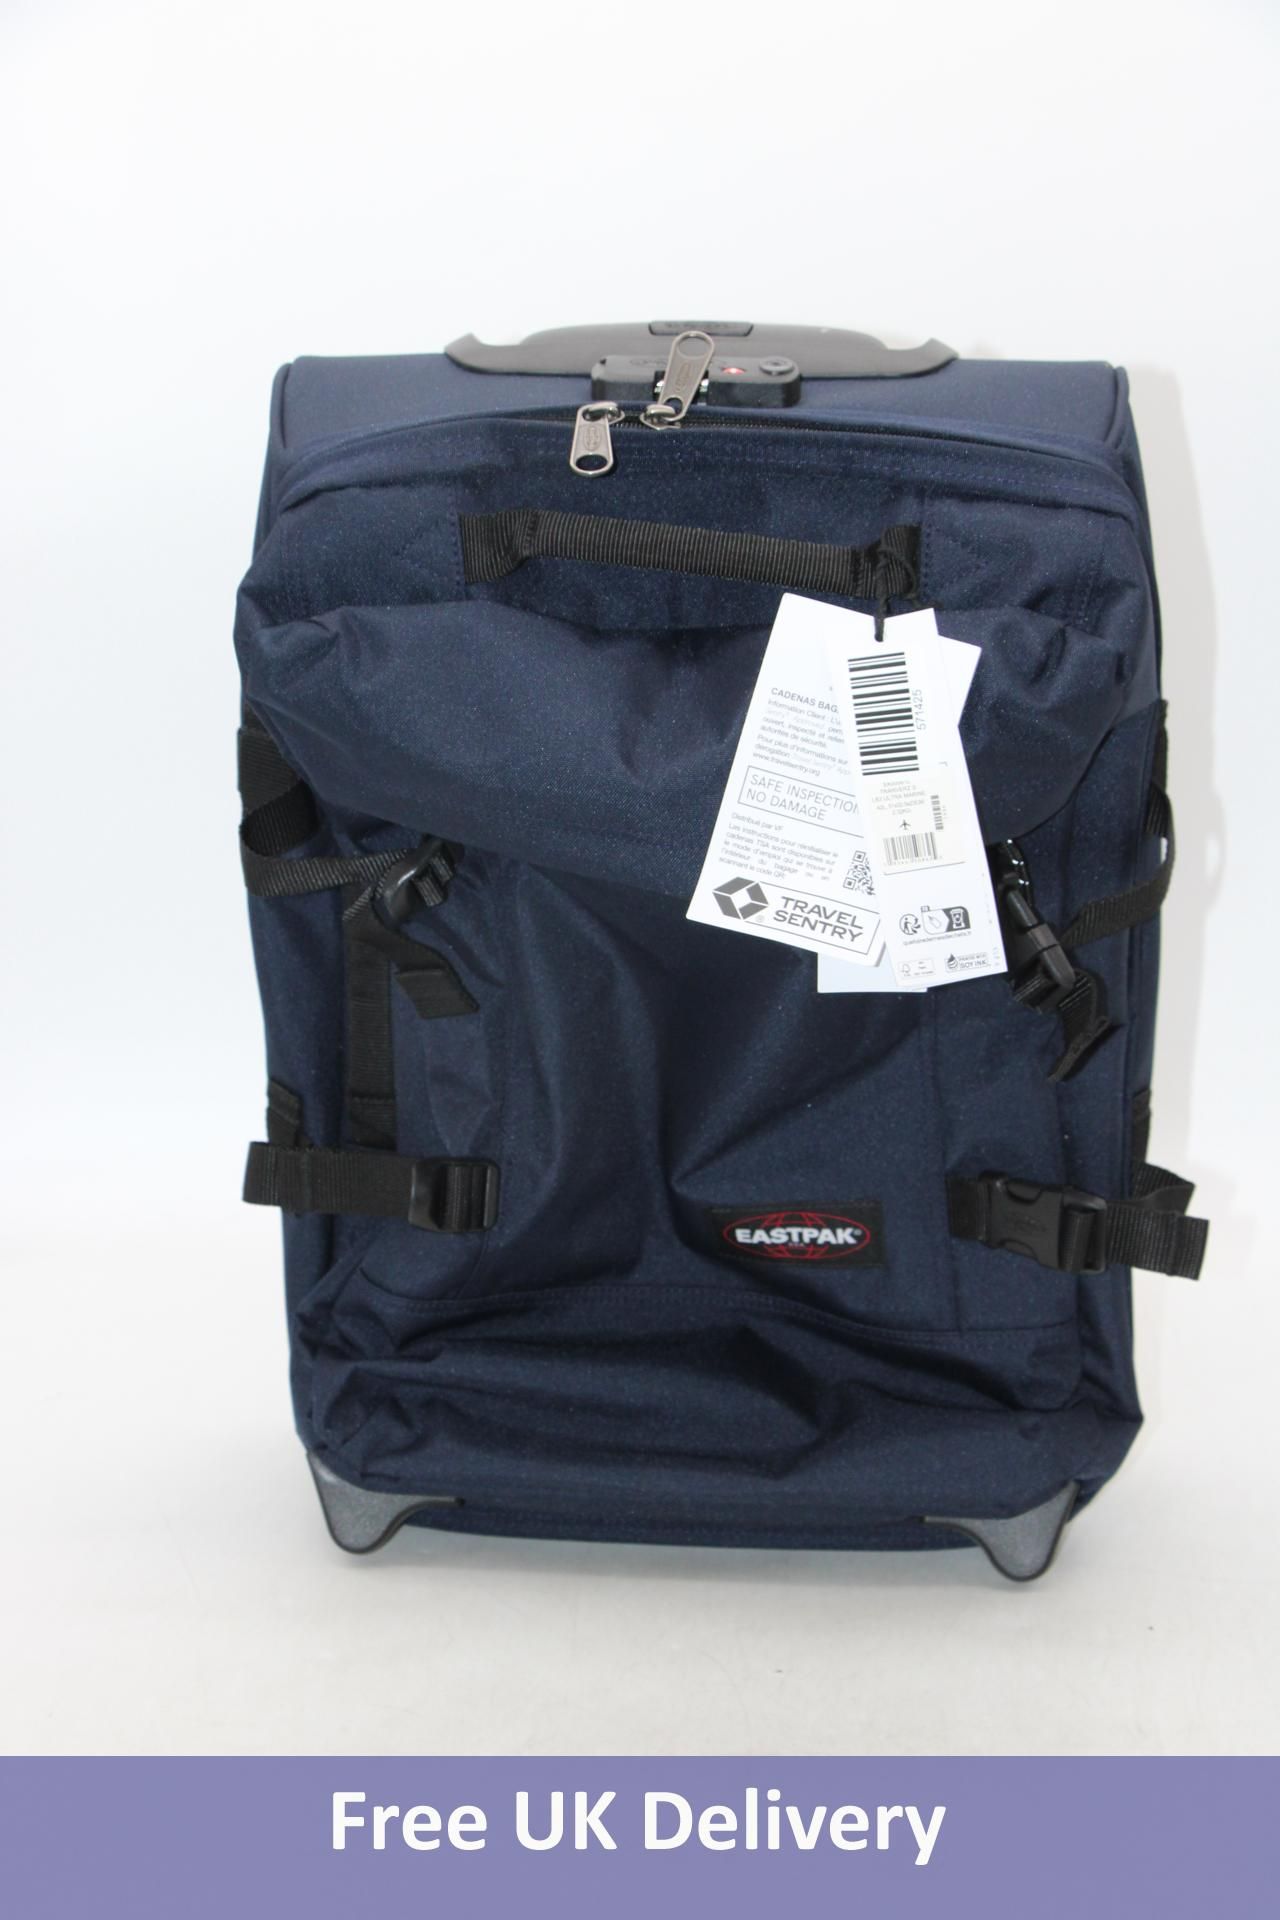 Eastpak Tranverz S L83 Ultra Marine Bag, Navy, 51 x 32.5 x 23 CM, 2.32KG